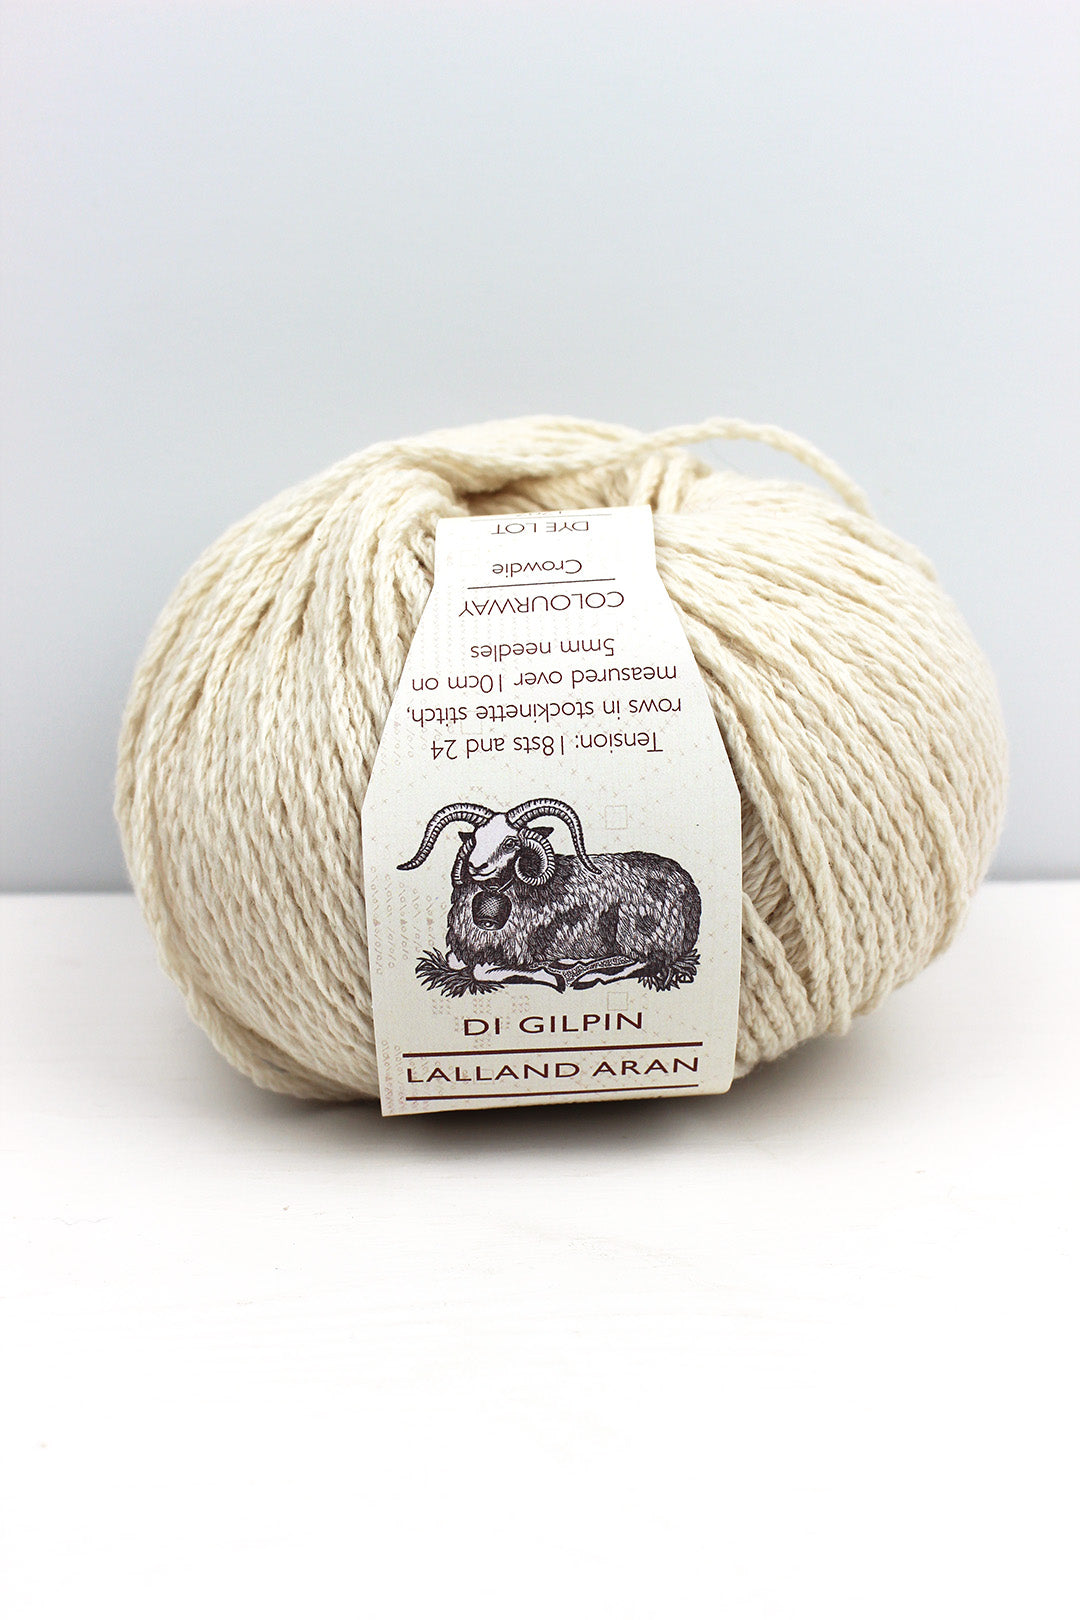 Di Gilpin aran weight yarn in creamy Crowdie colourway. Scottish Textiles Showcase